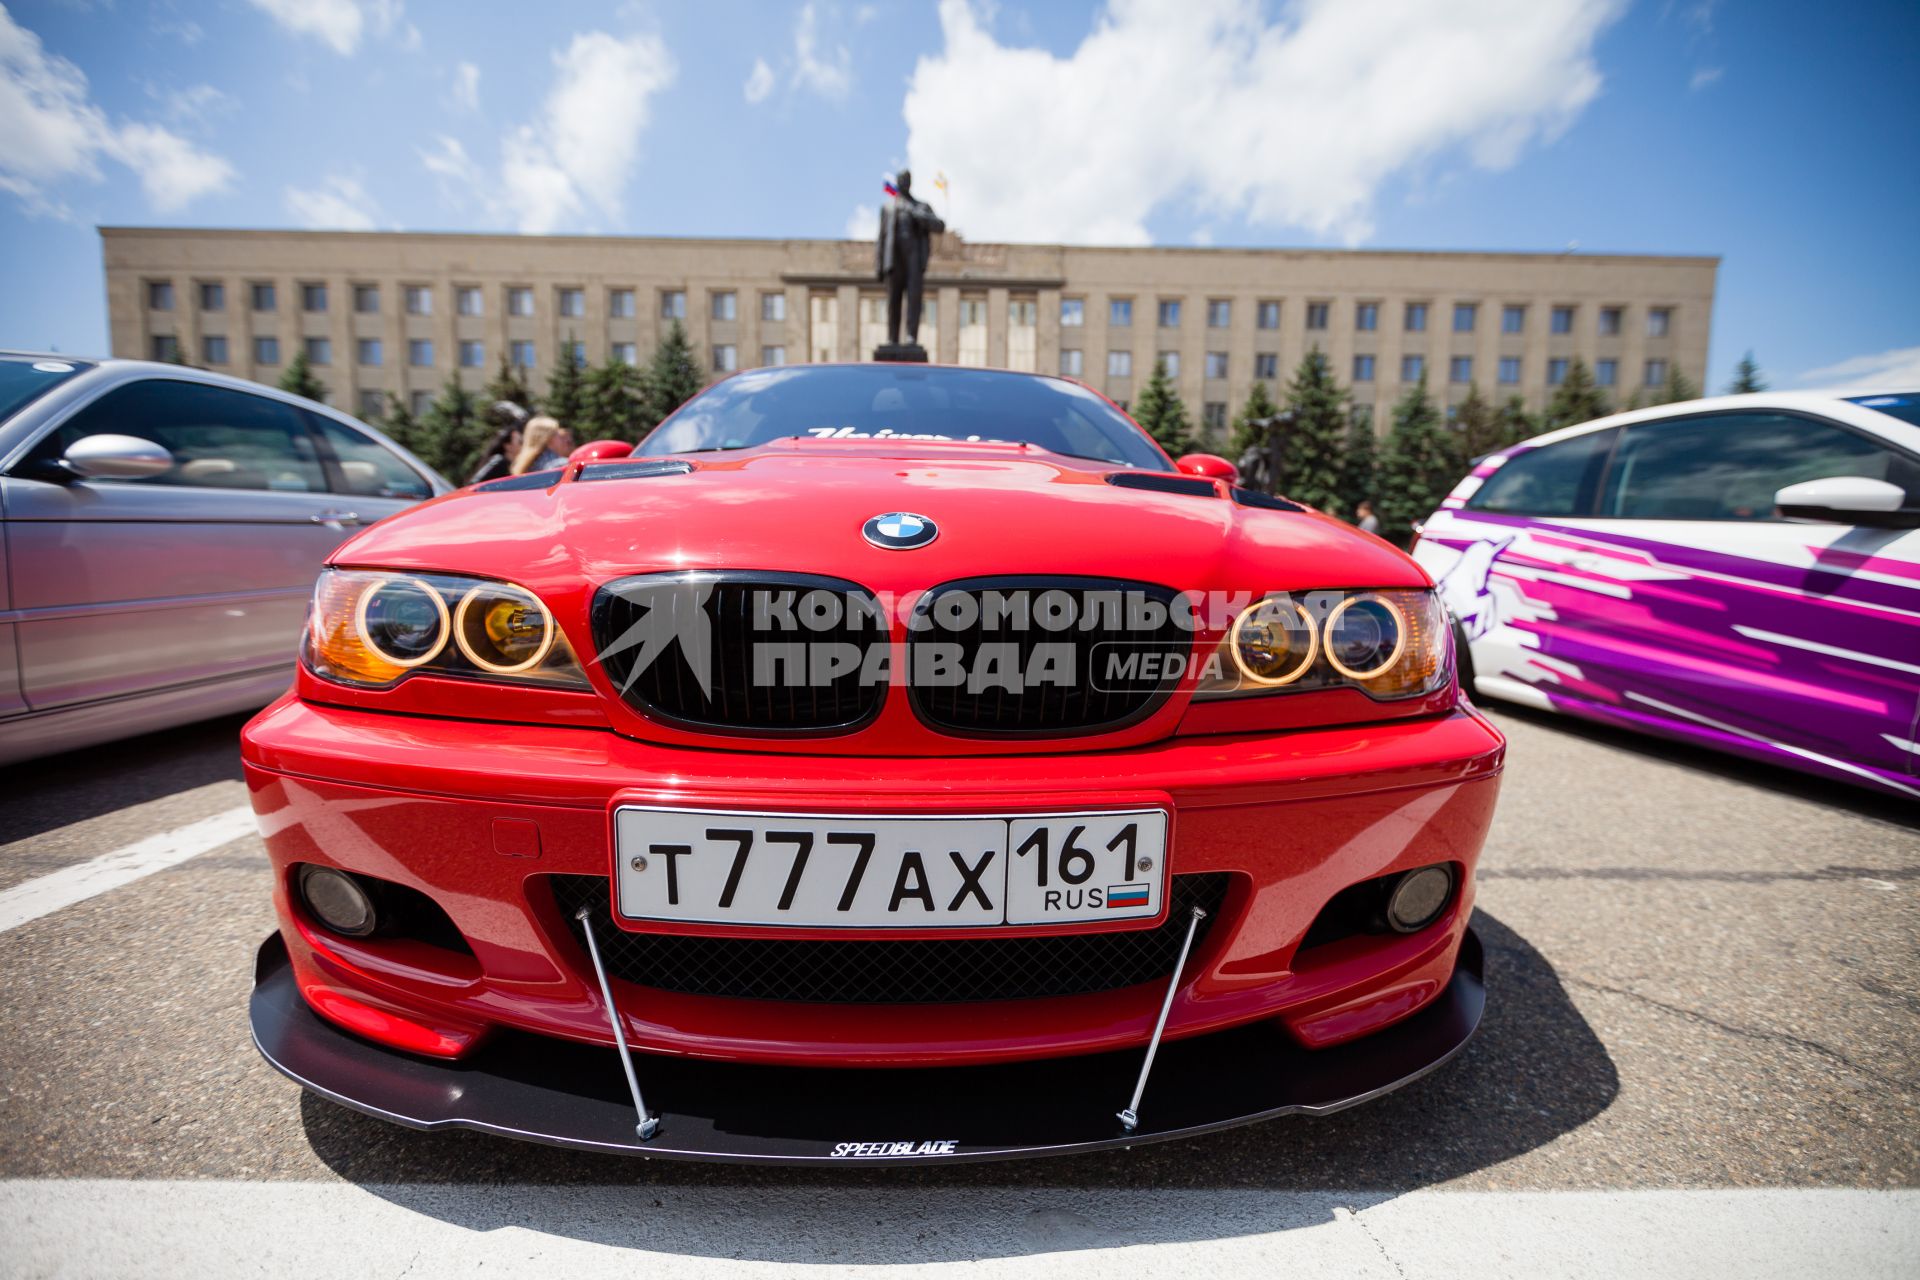 Ставрополь. Автомобиль  BMW на фестивале `Парковка` на площади Ленина.